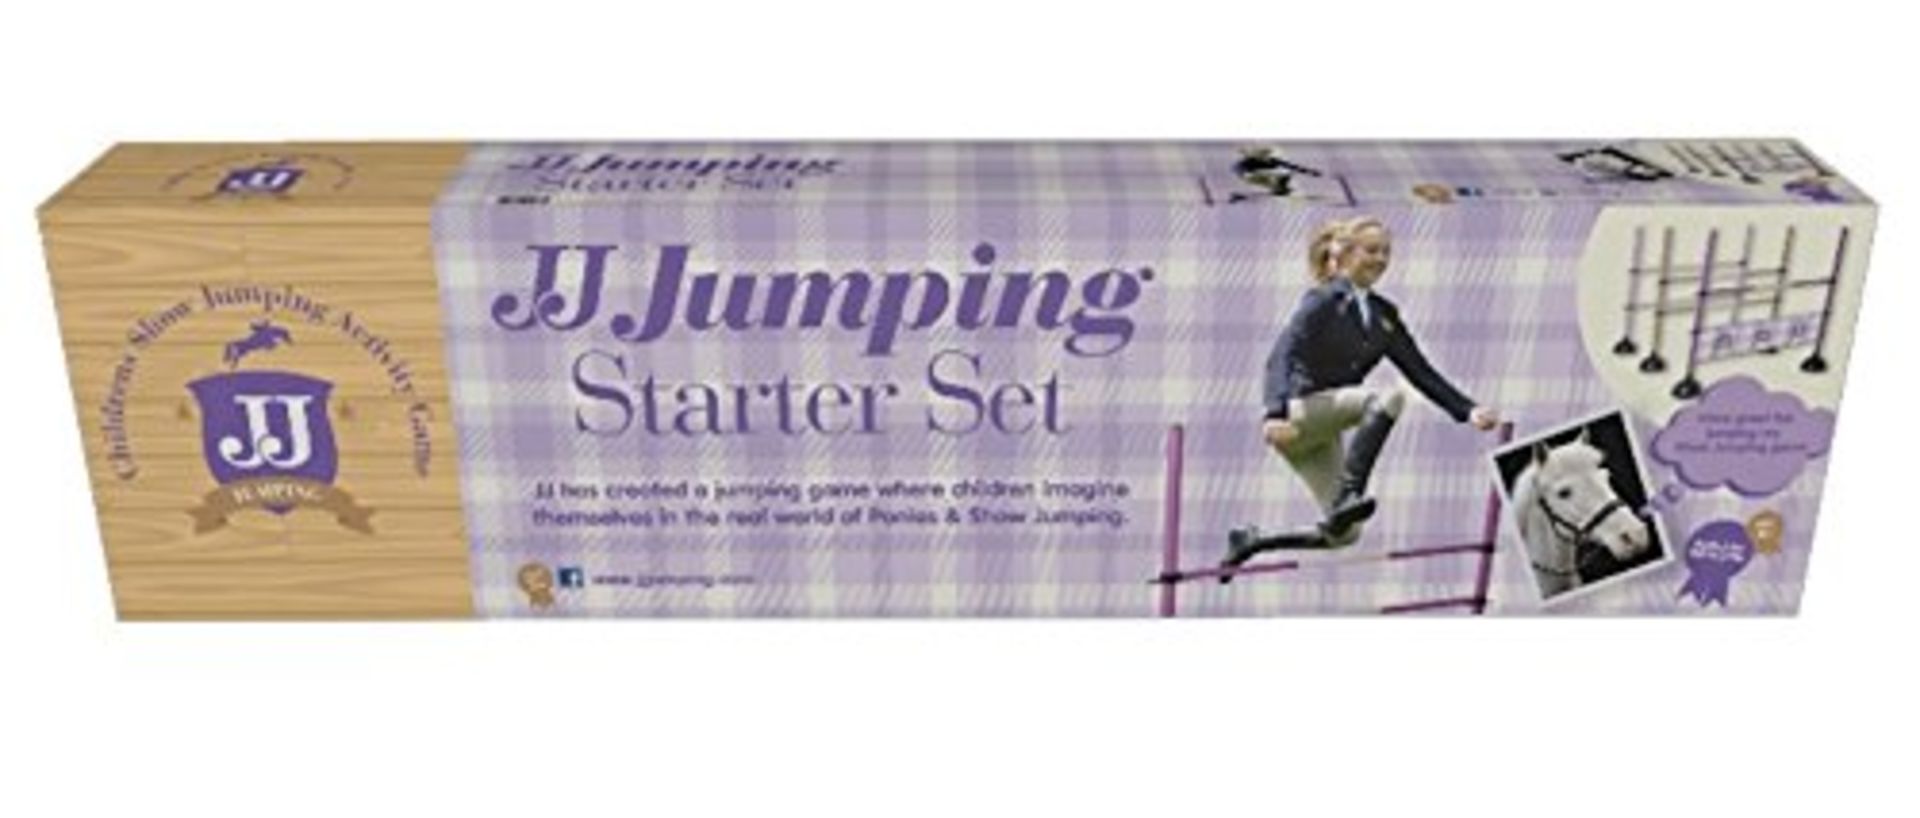 8 x JJ Jumping Childrens Show Activity Game Starter Set | 5025599010372 | RRP £ 599.92 - Bild 2 aus 2